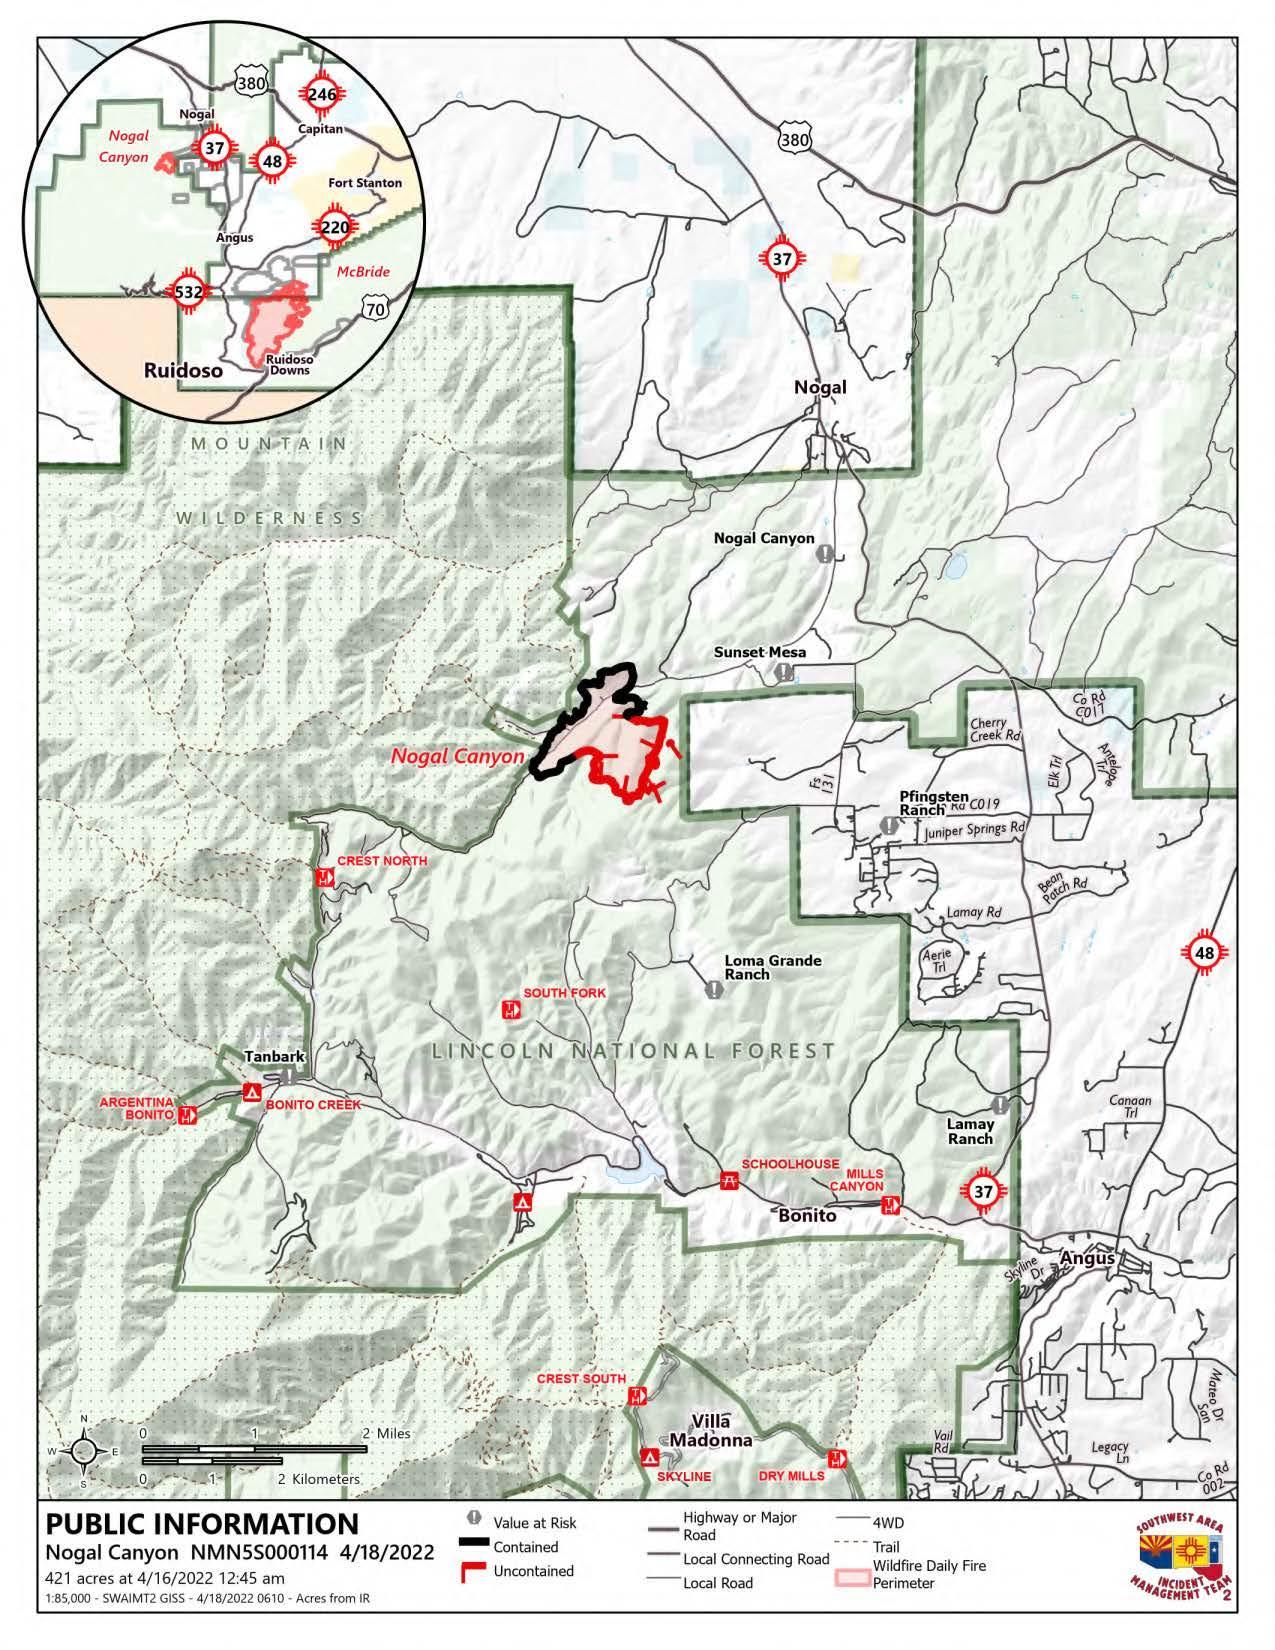 Nogal Canyon Fire Map April 18, 2022